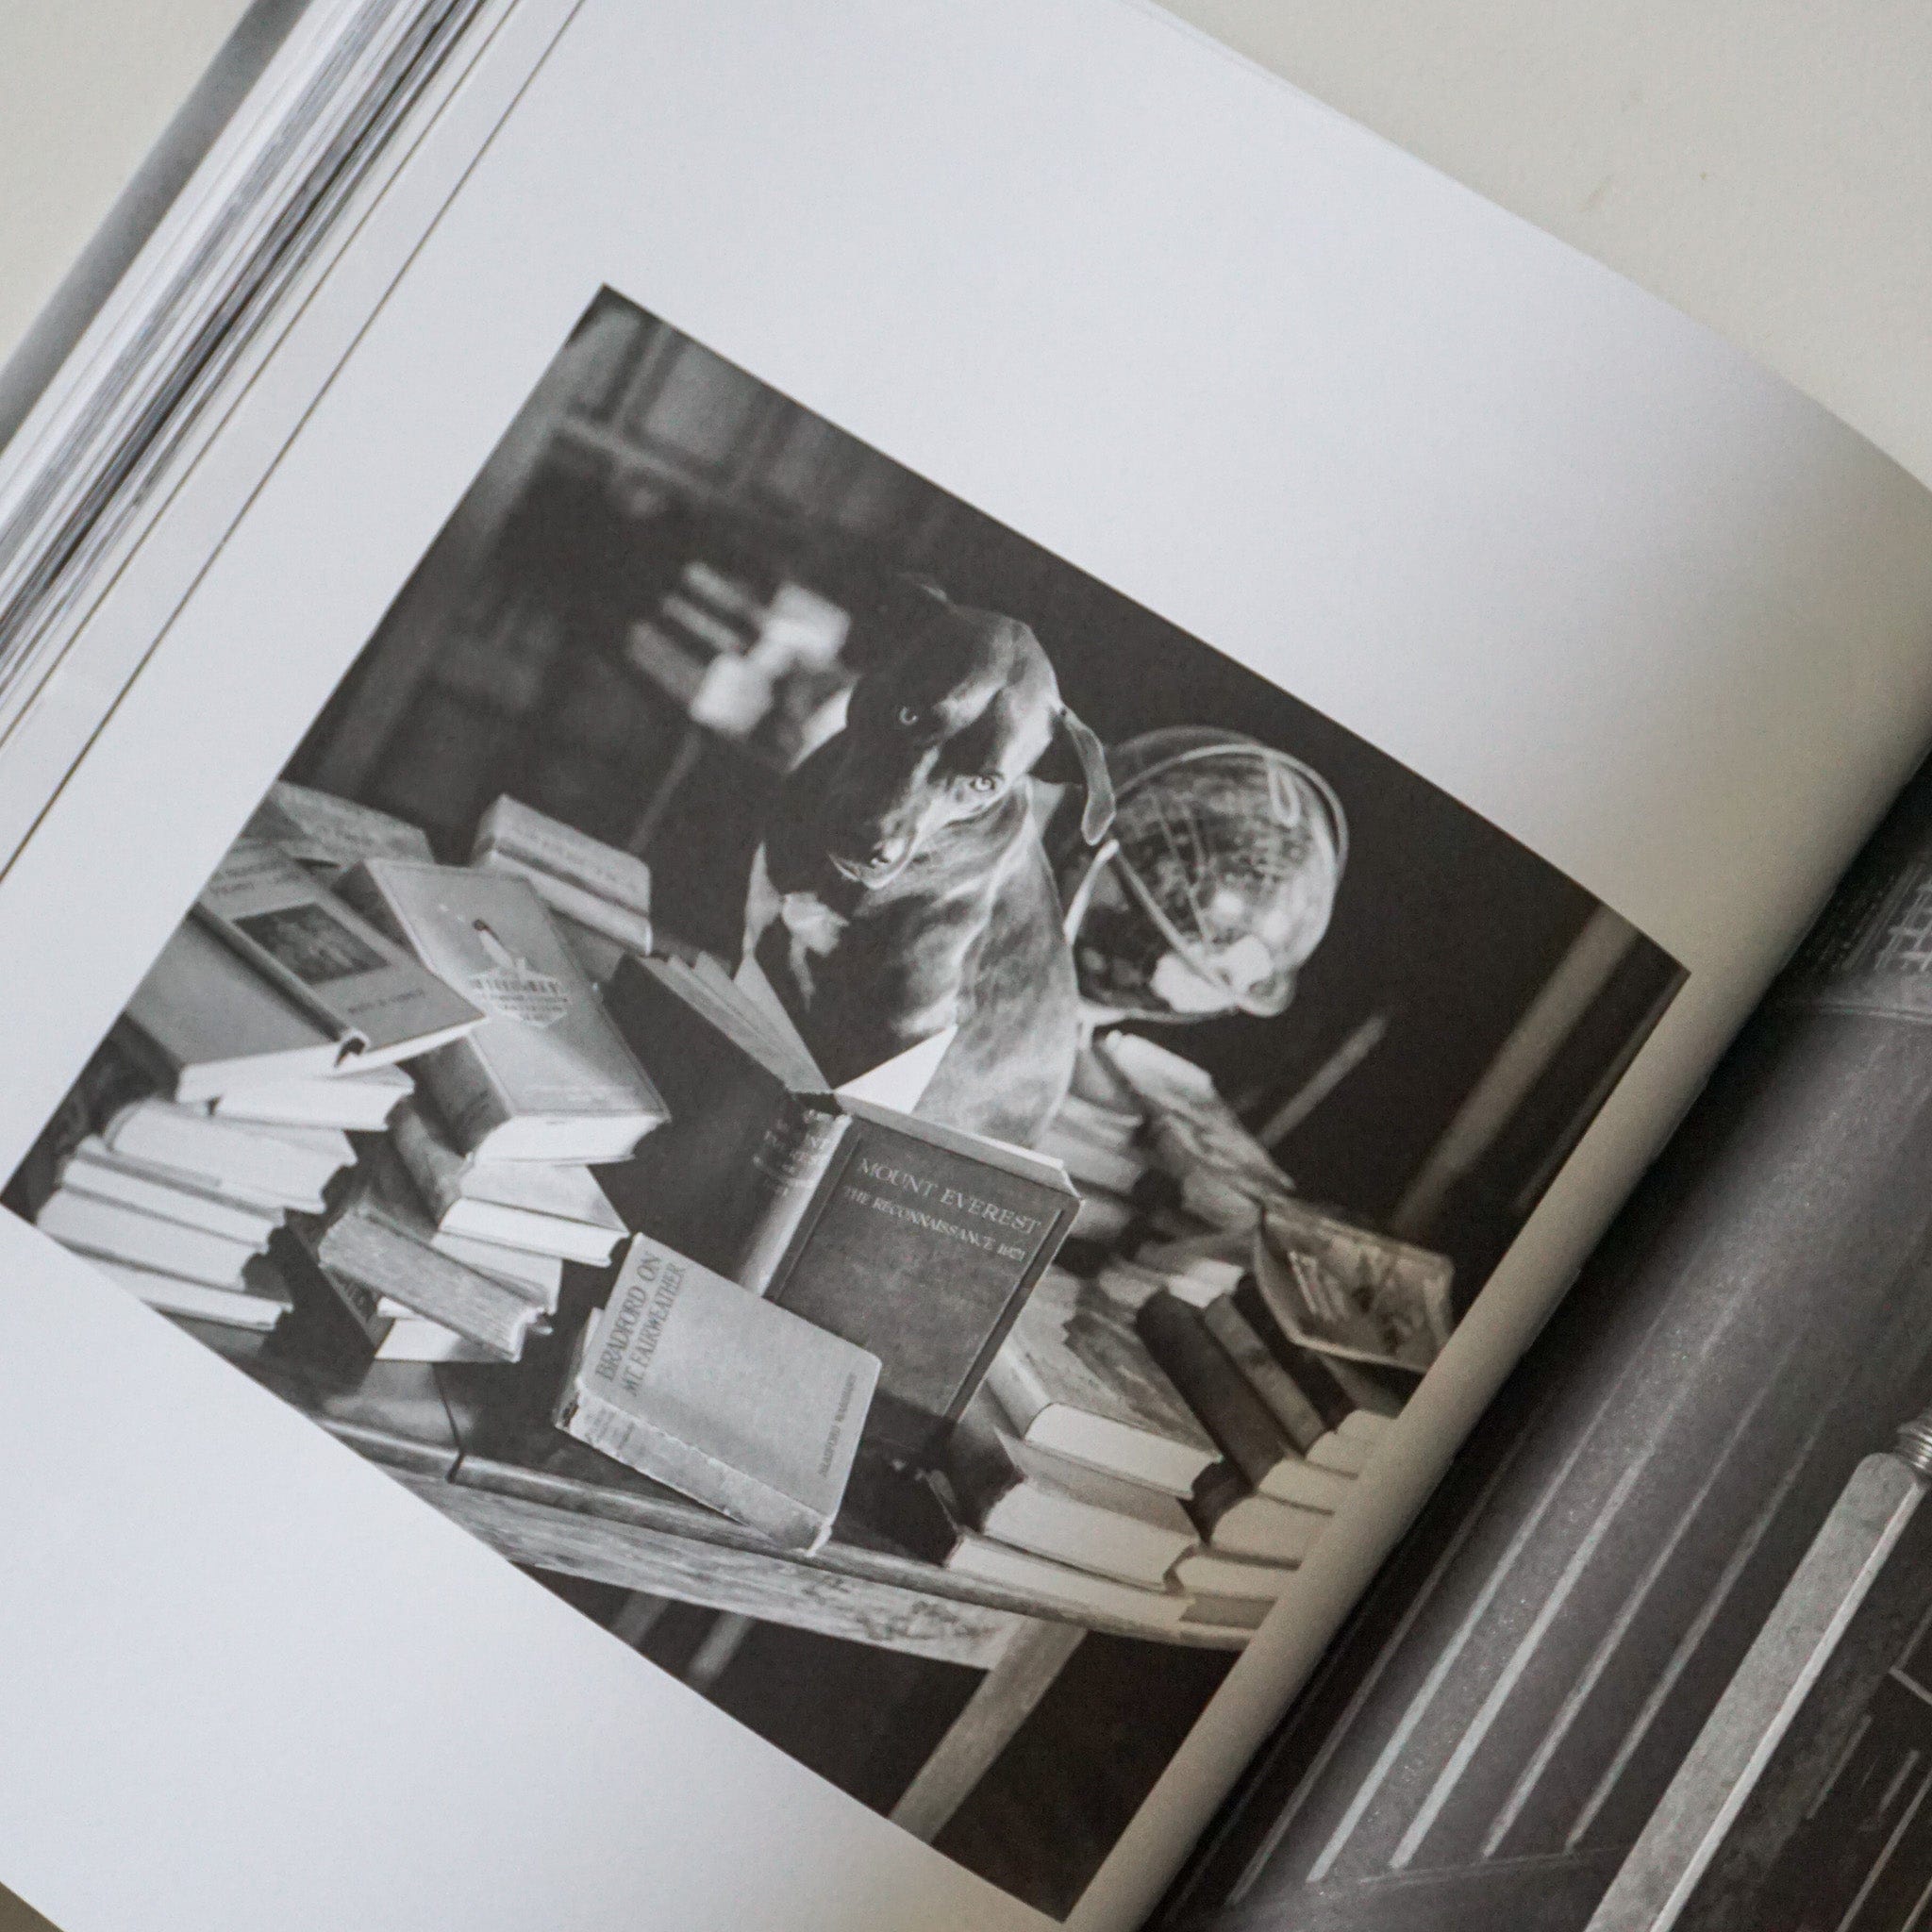 Taschen Books Bruce Weber. The Golden Retriever Photographic Society